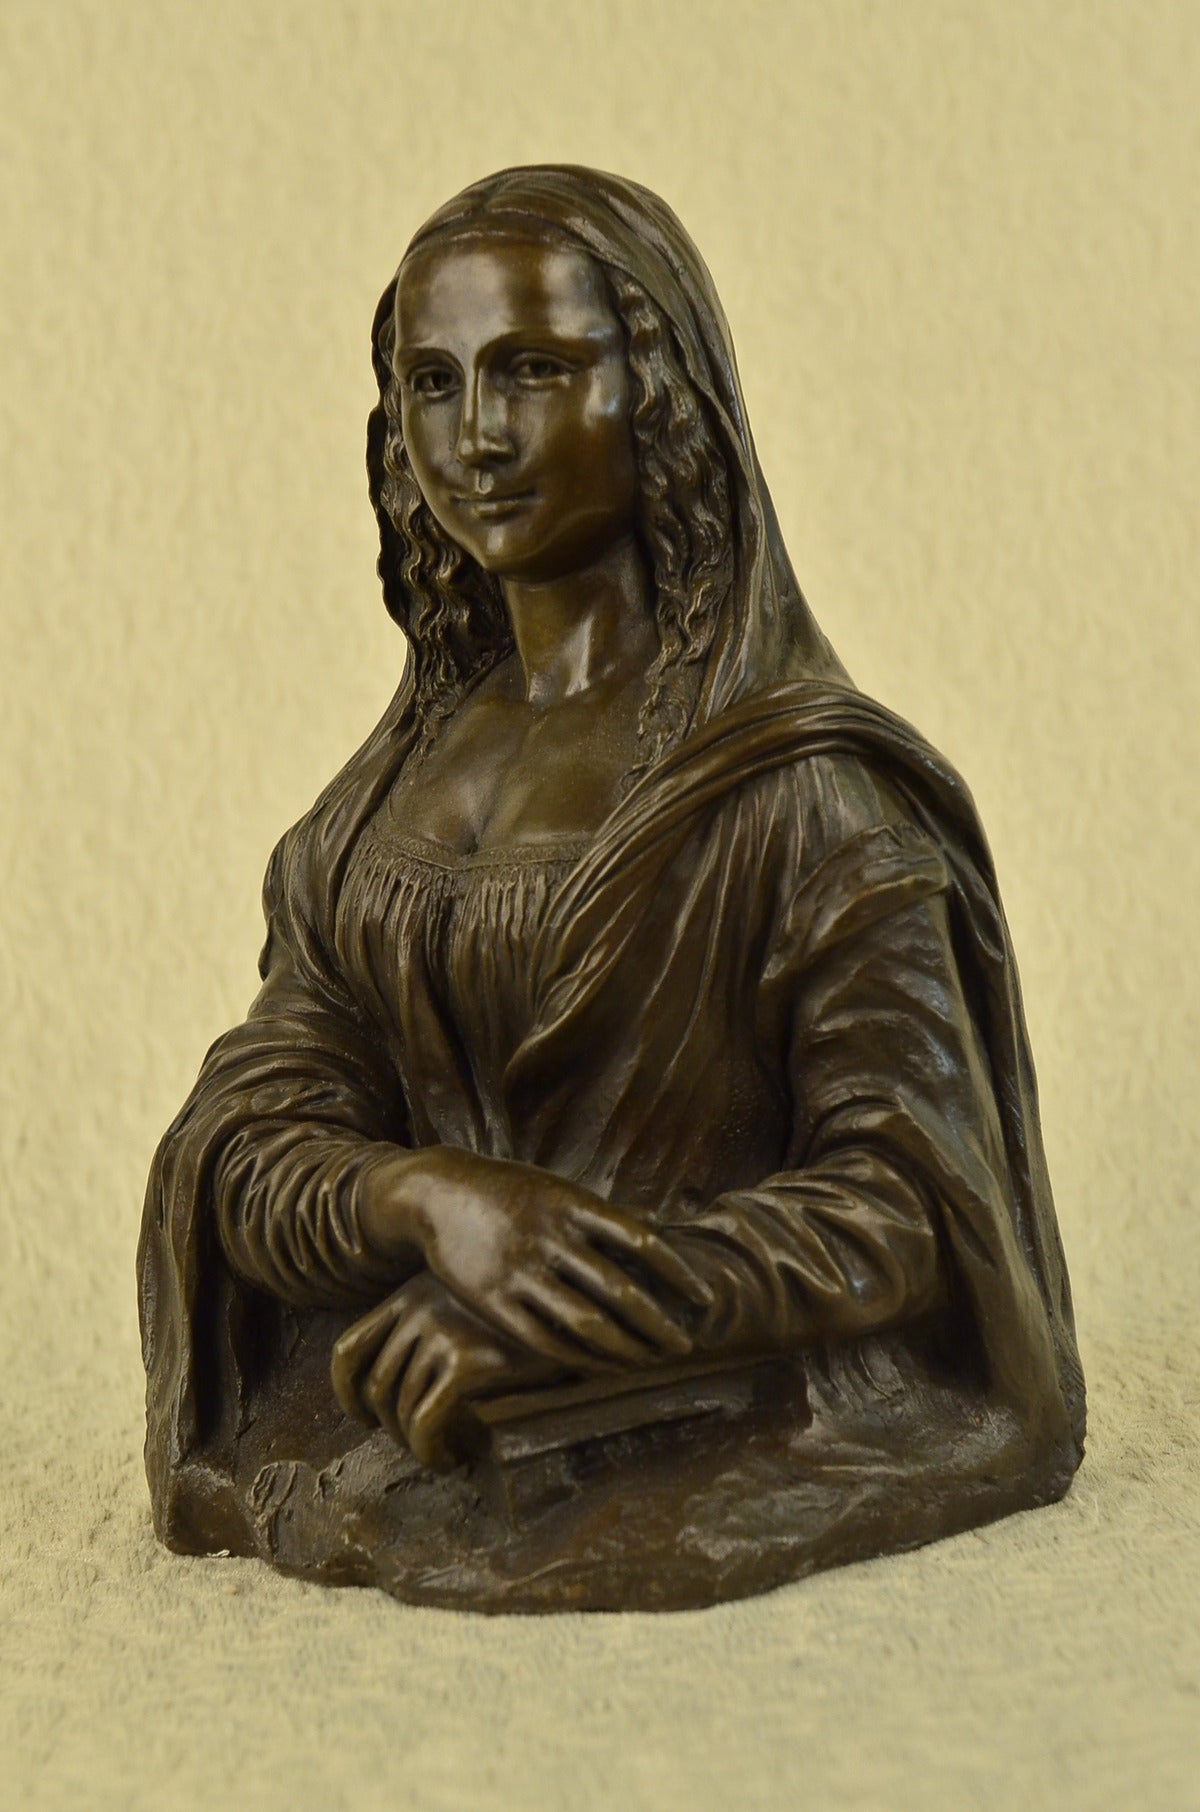 Handcrafted bronze sculpture SALE Modern Deco Art Mona Lisa French Art Signed